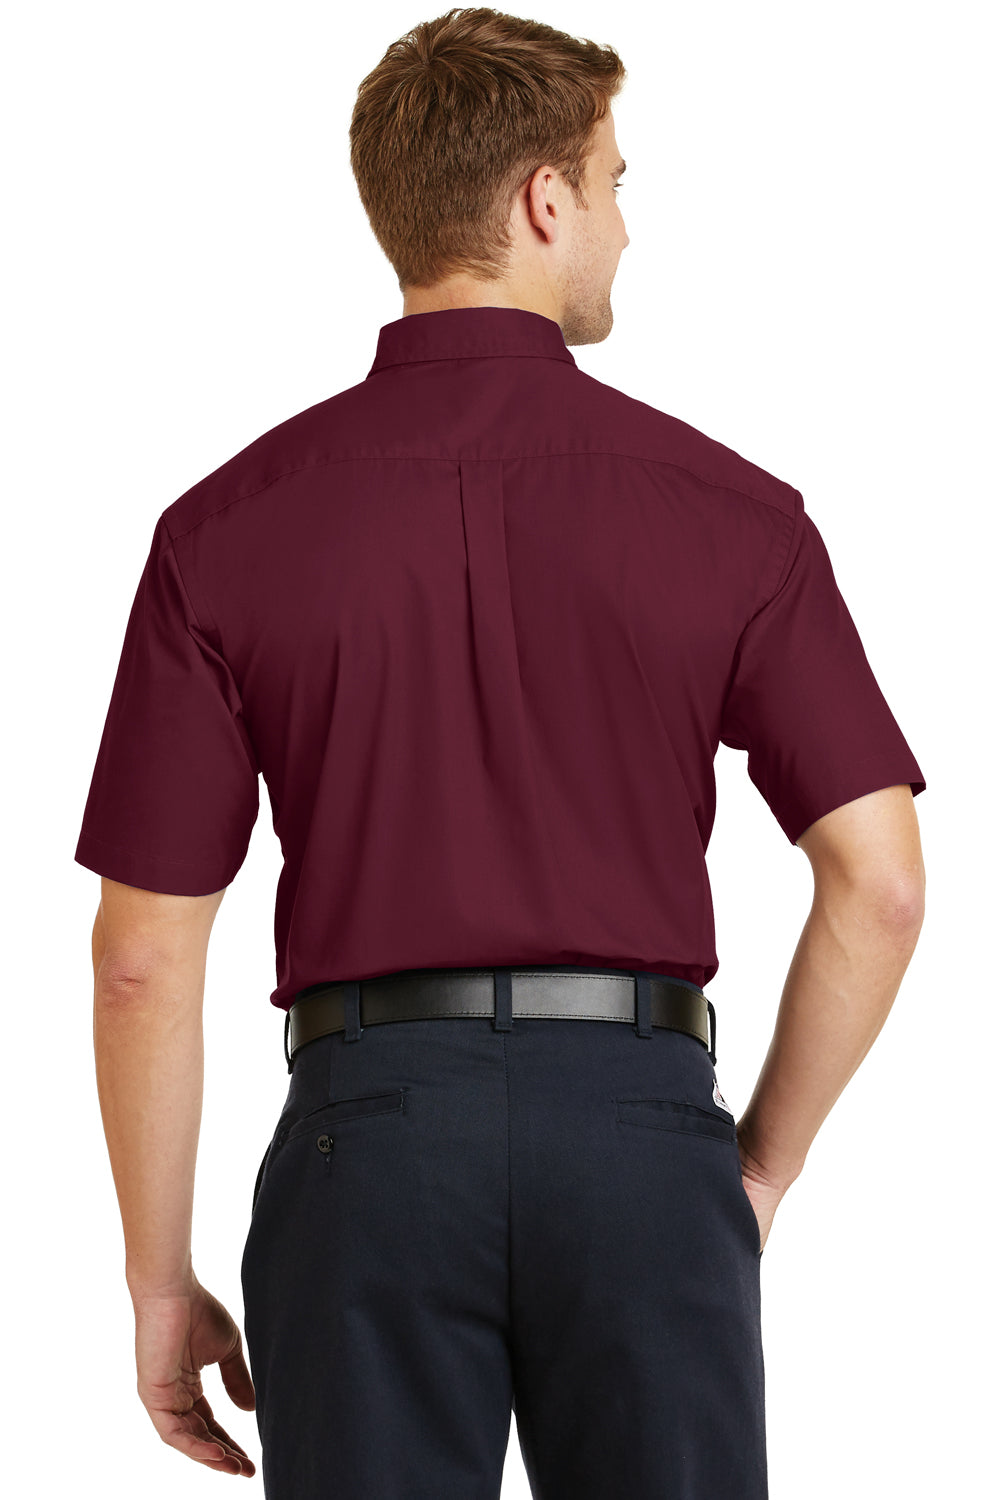 CornerStone SP18 Mens SuperPro Stain Resistant Short Sleeve Button Down Shirt w/ Pocket Burgundy Back